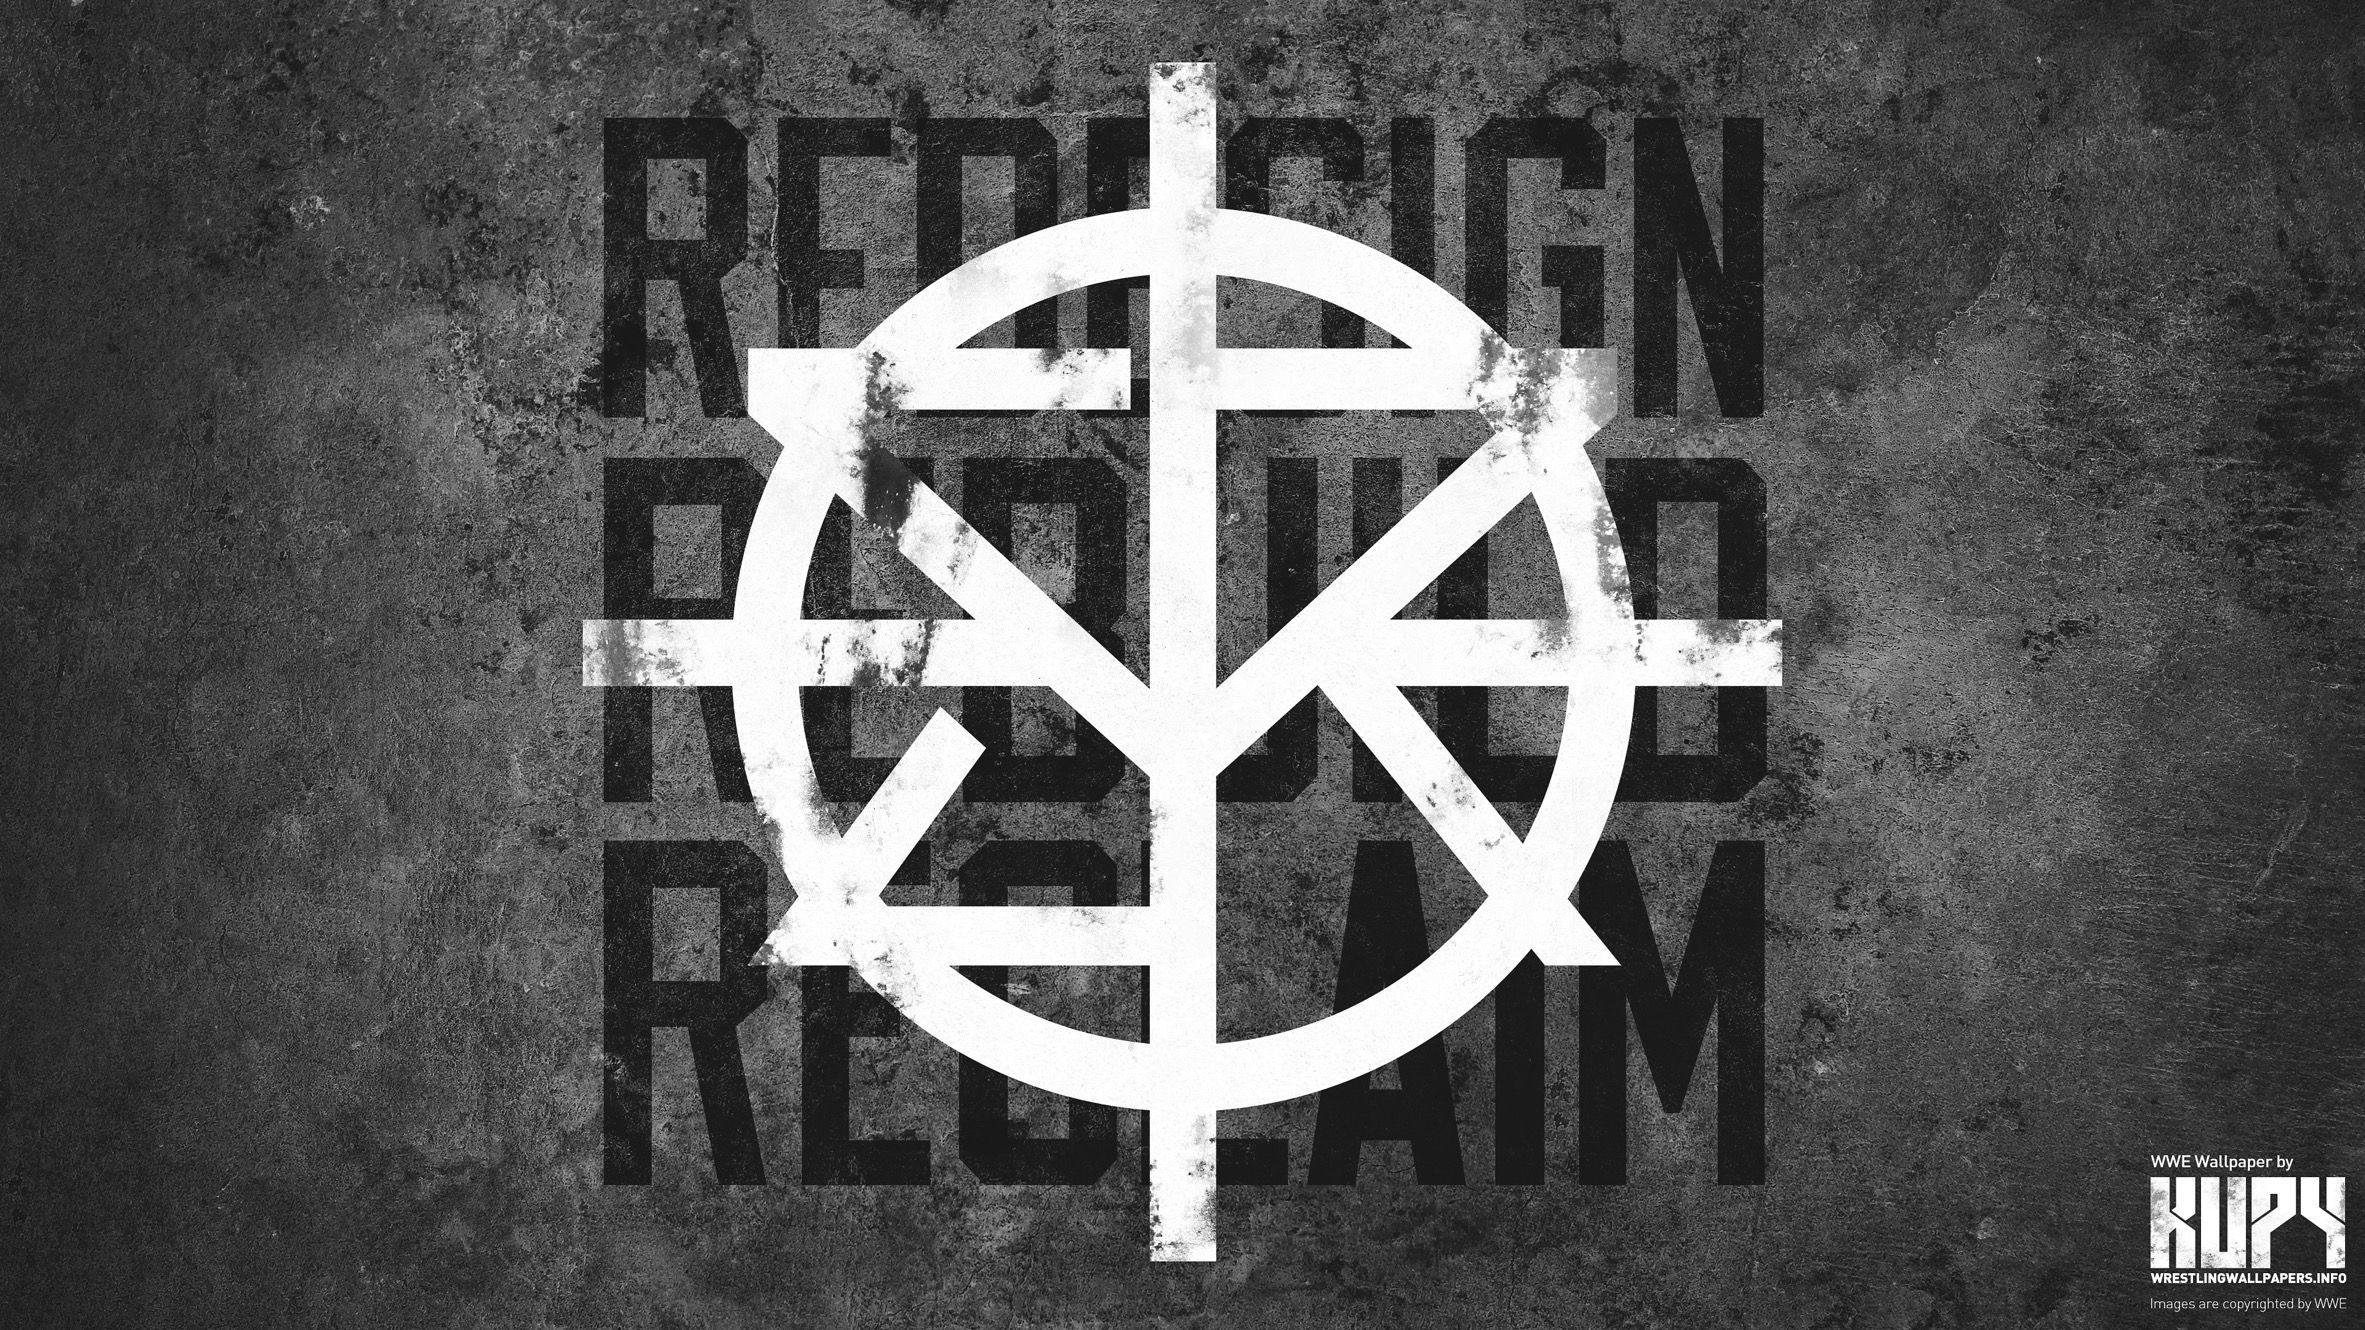 The shield. Roman reigns logo, Wwe logo, Wwe seth